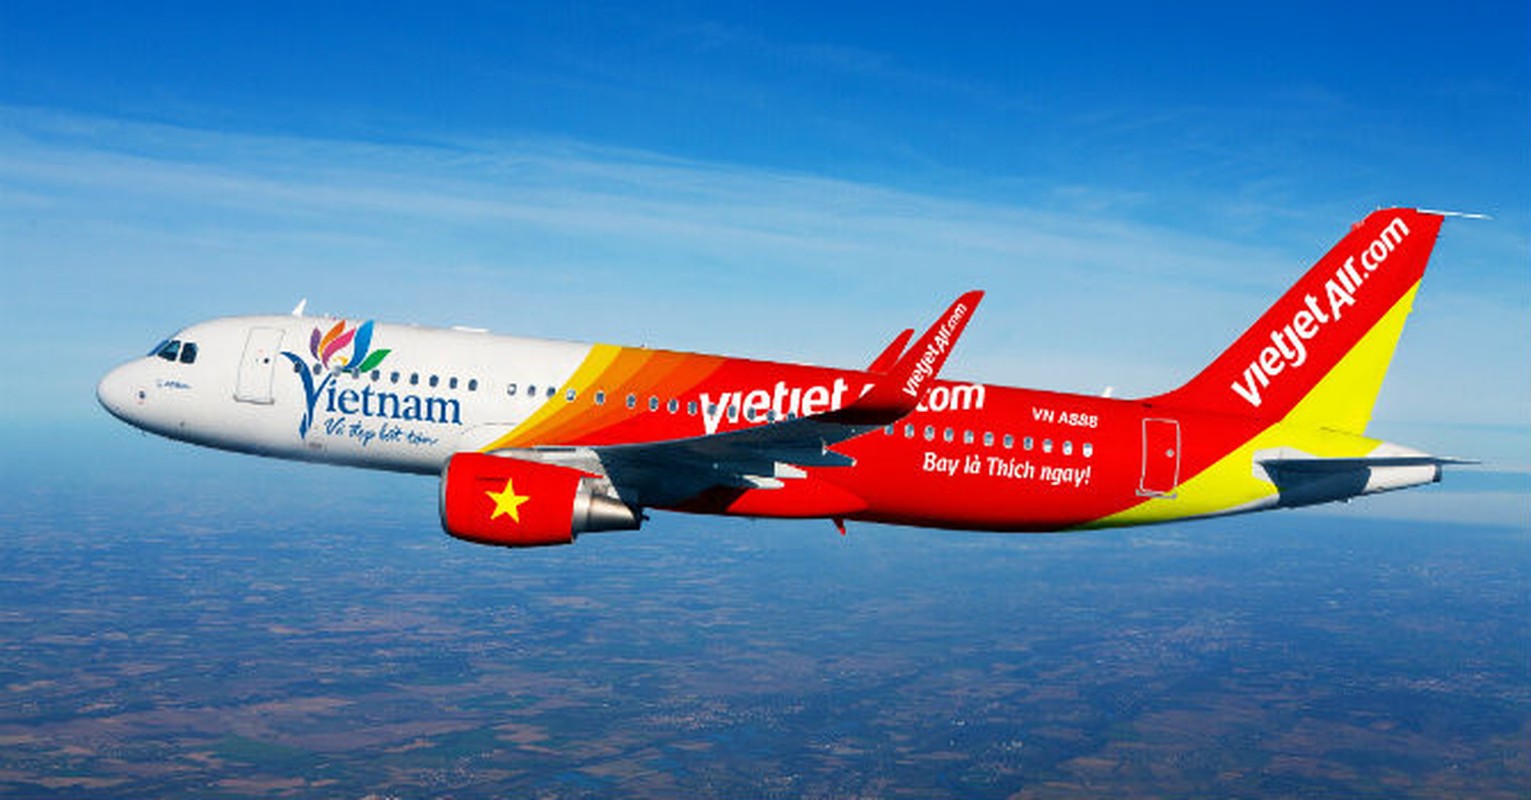 Vietnam Airlines, VietJet Air lien hoan dinh phot nang nhu nao nam 2018?-Hinh-12